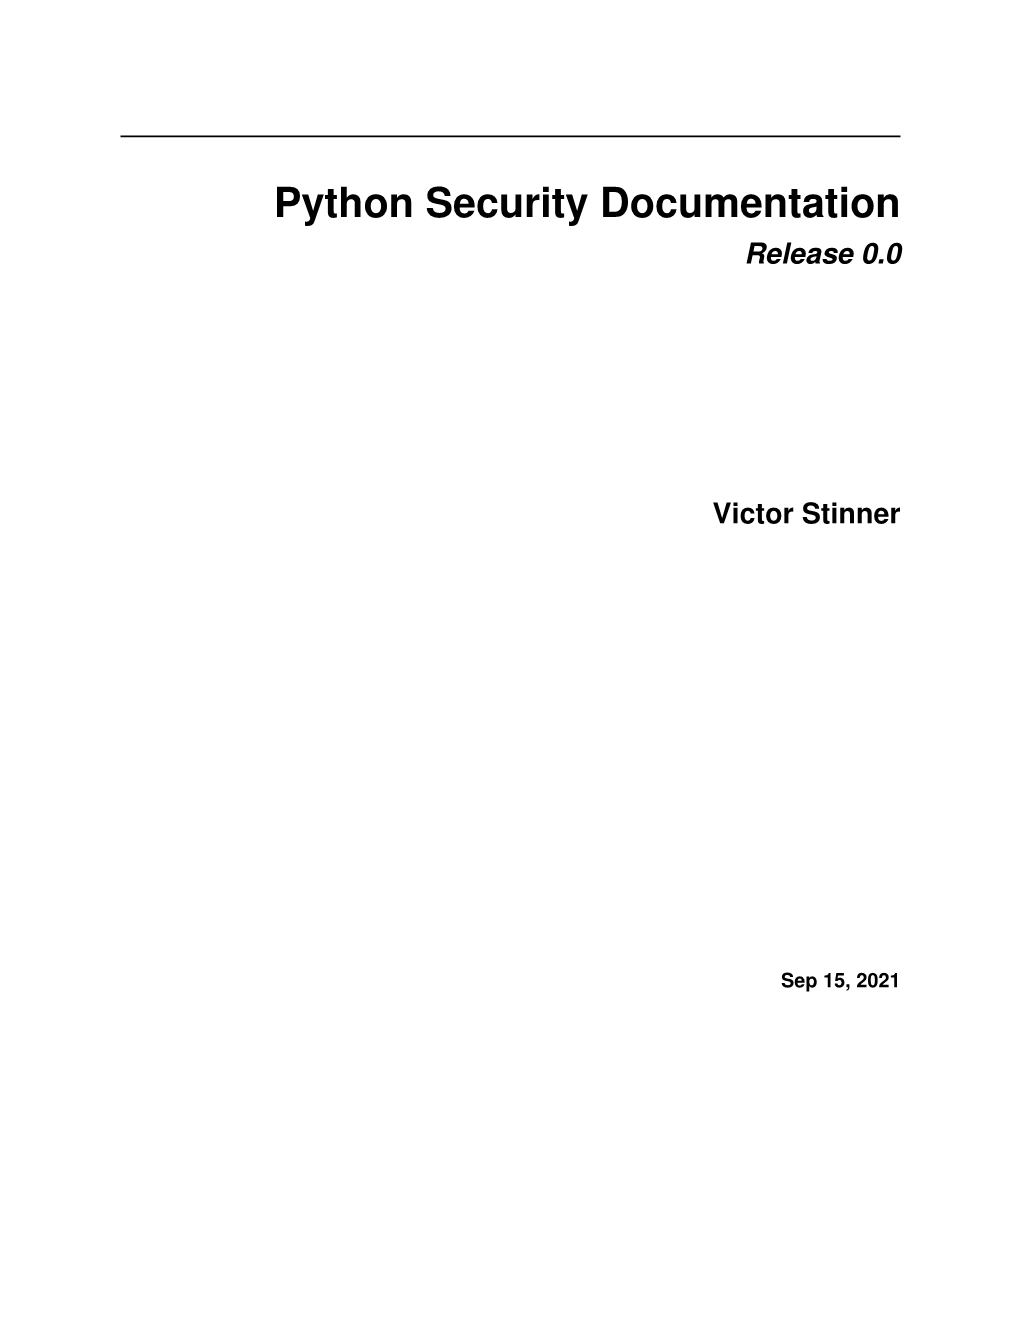 Python Security Documentation Release 0.0